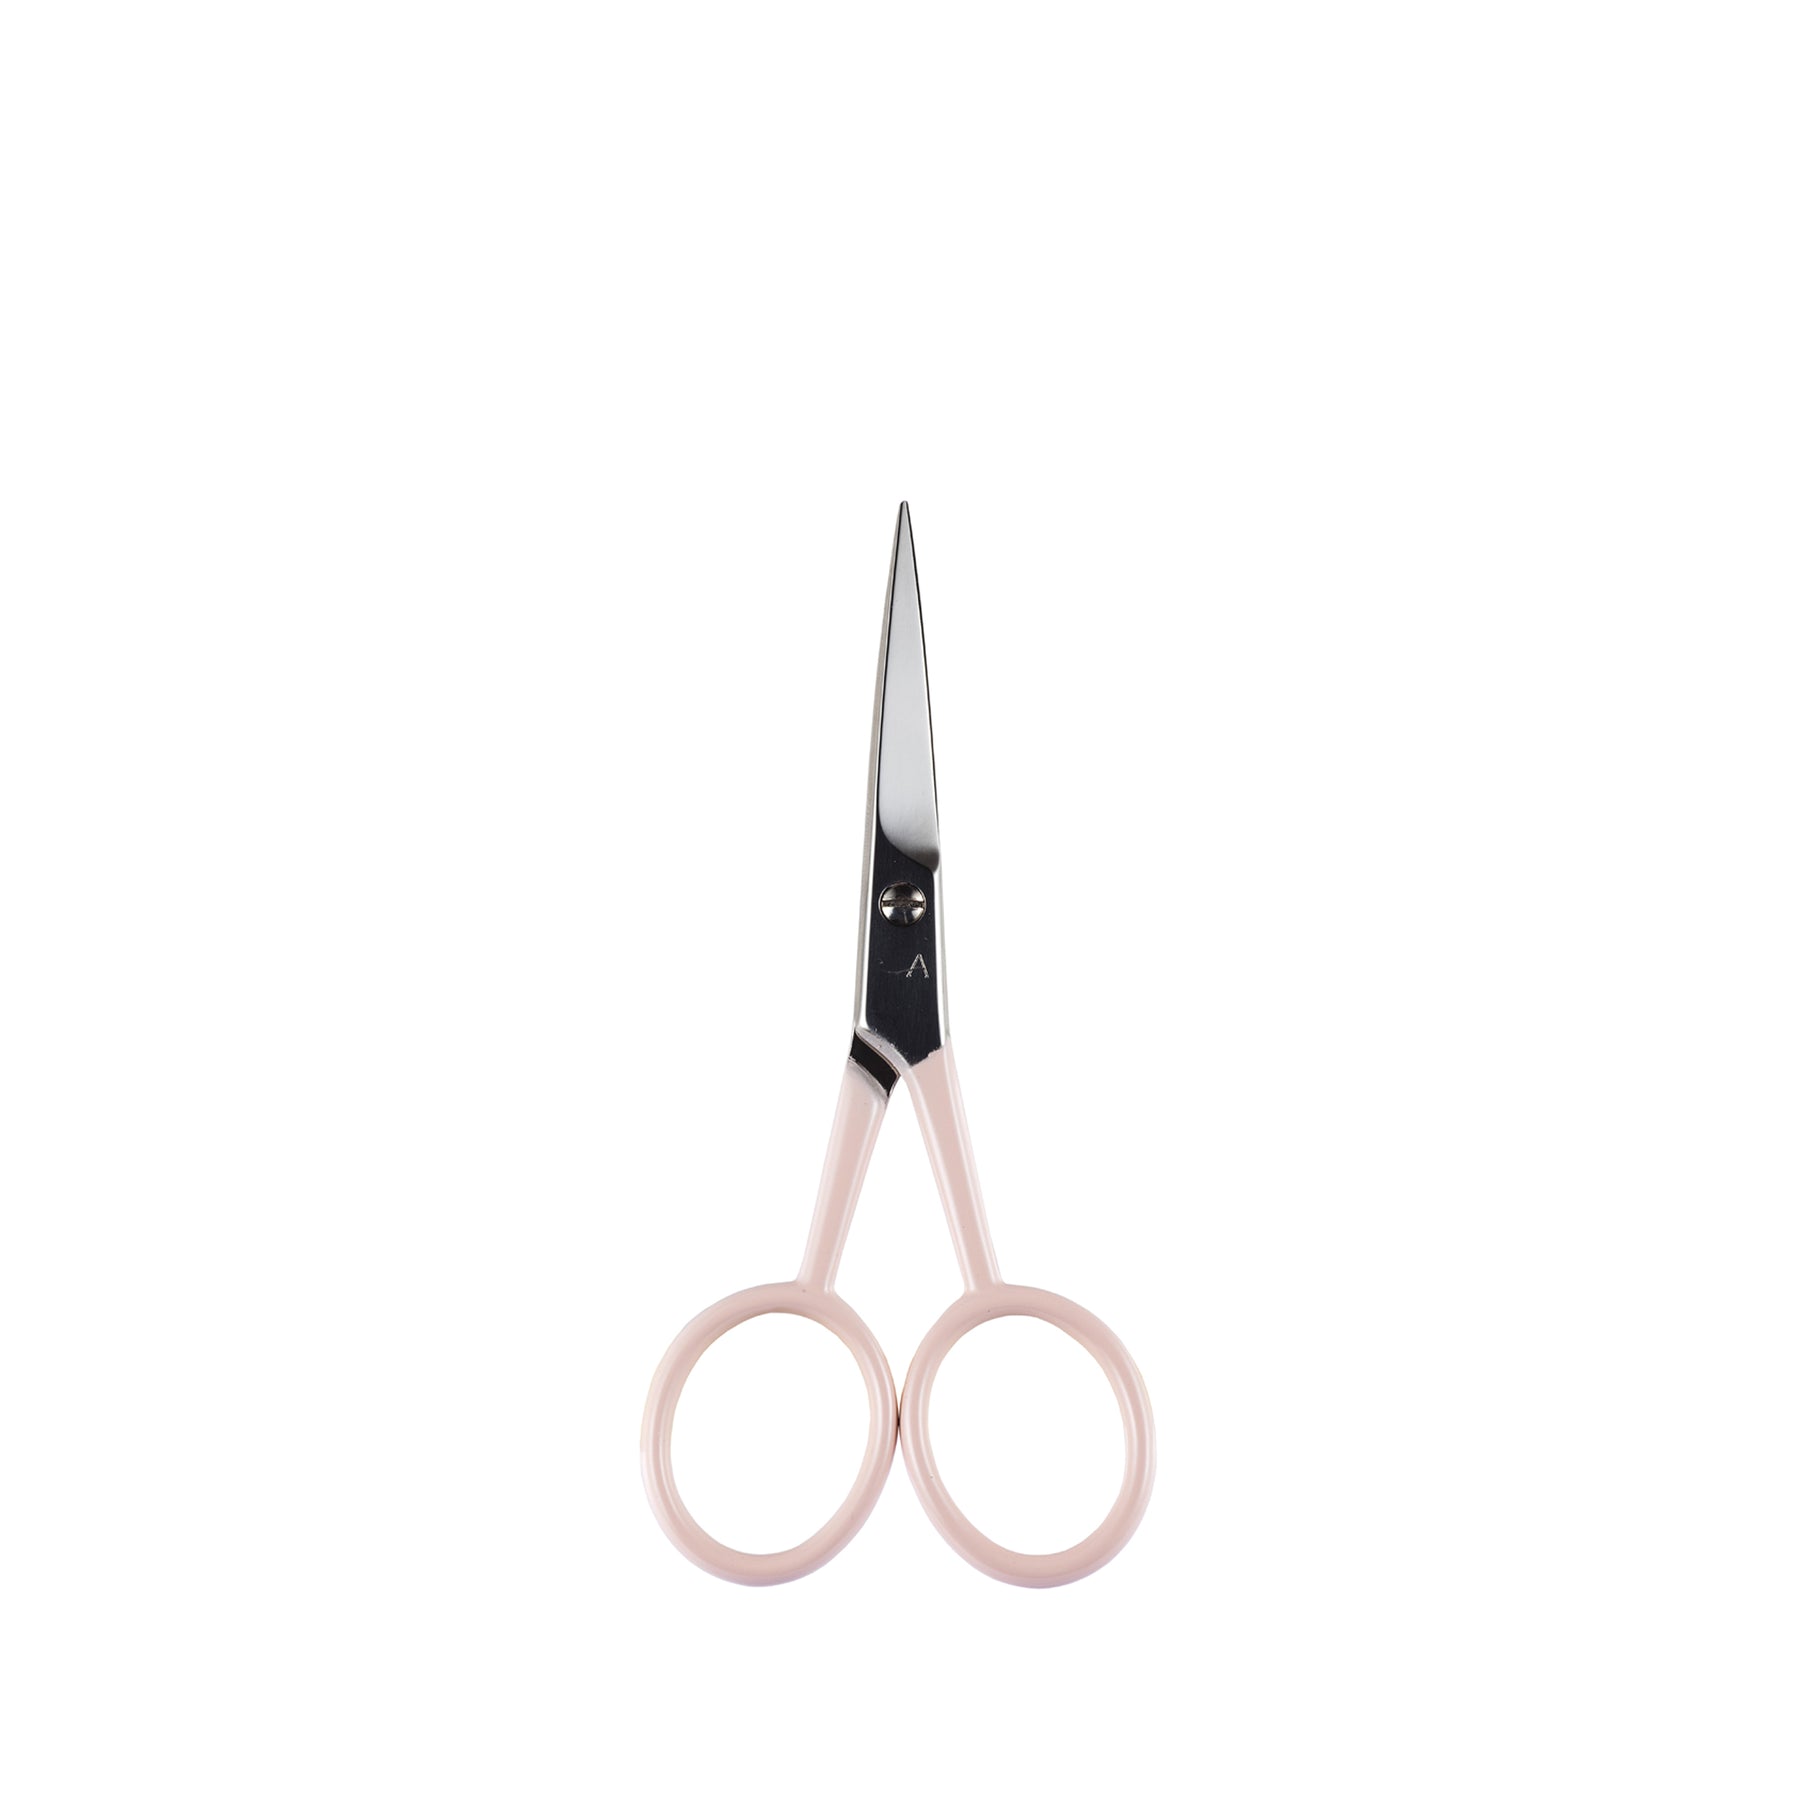 Anastasia Beverly Hills Scissors – The Beauty Editor